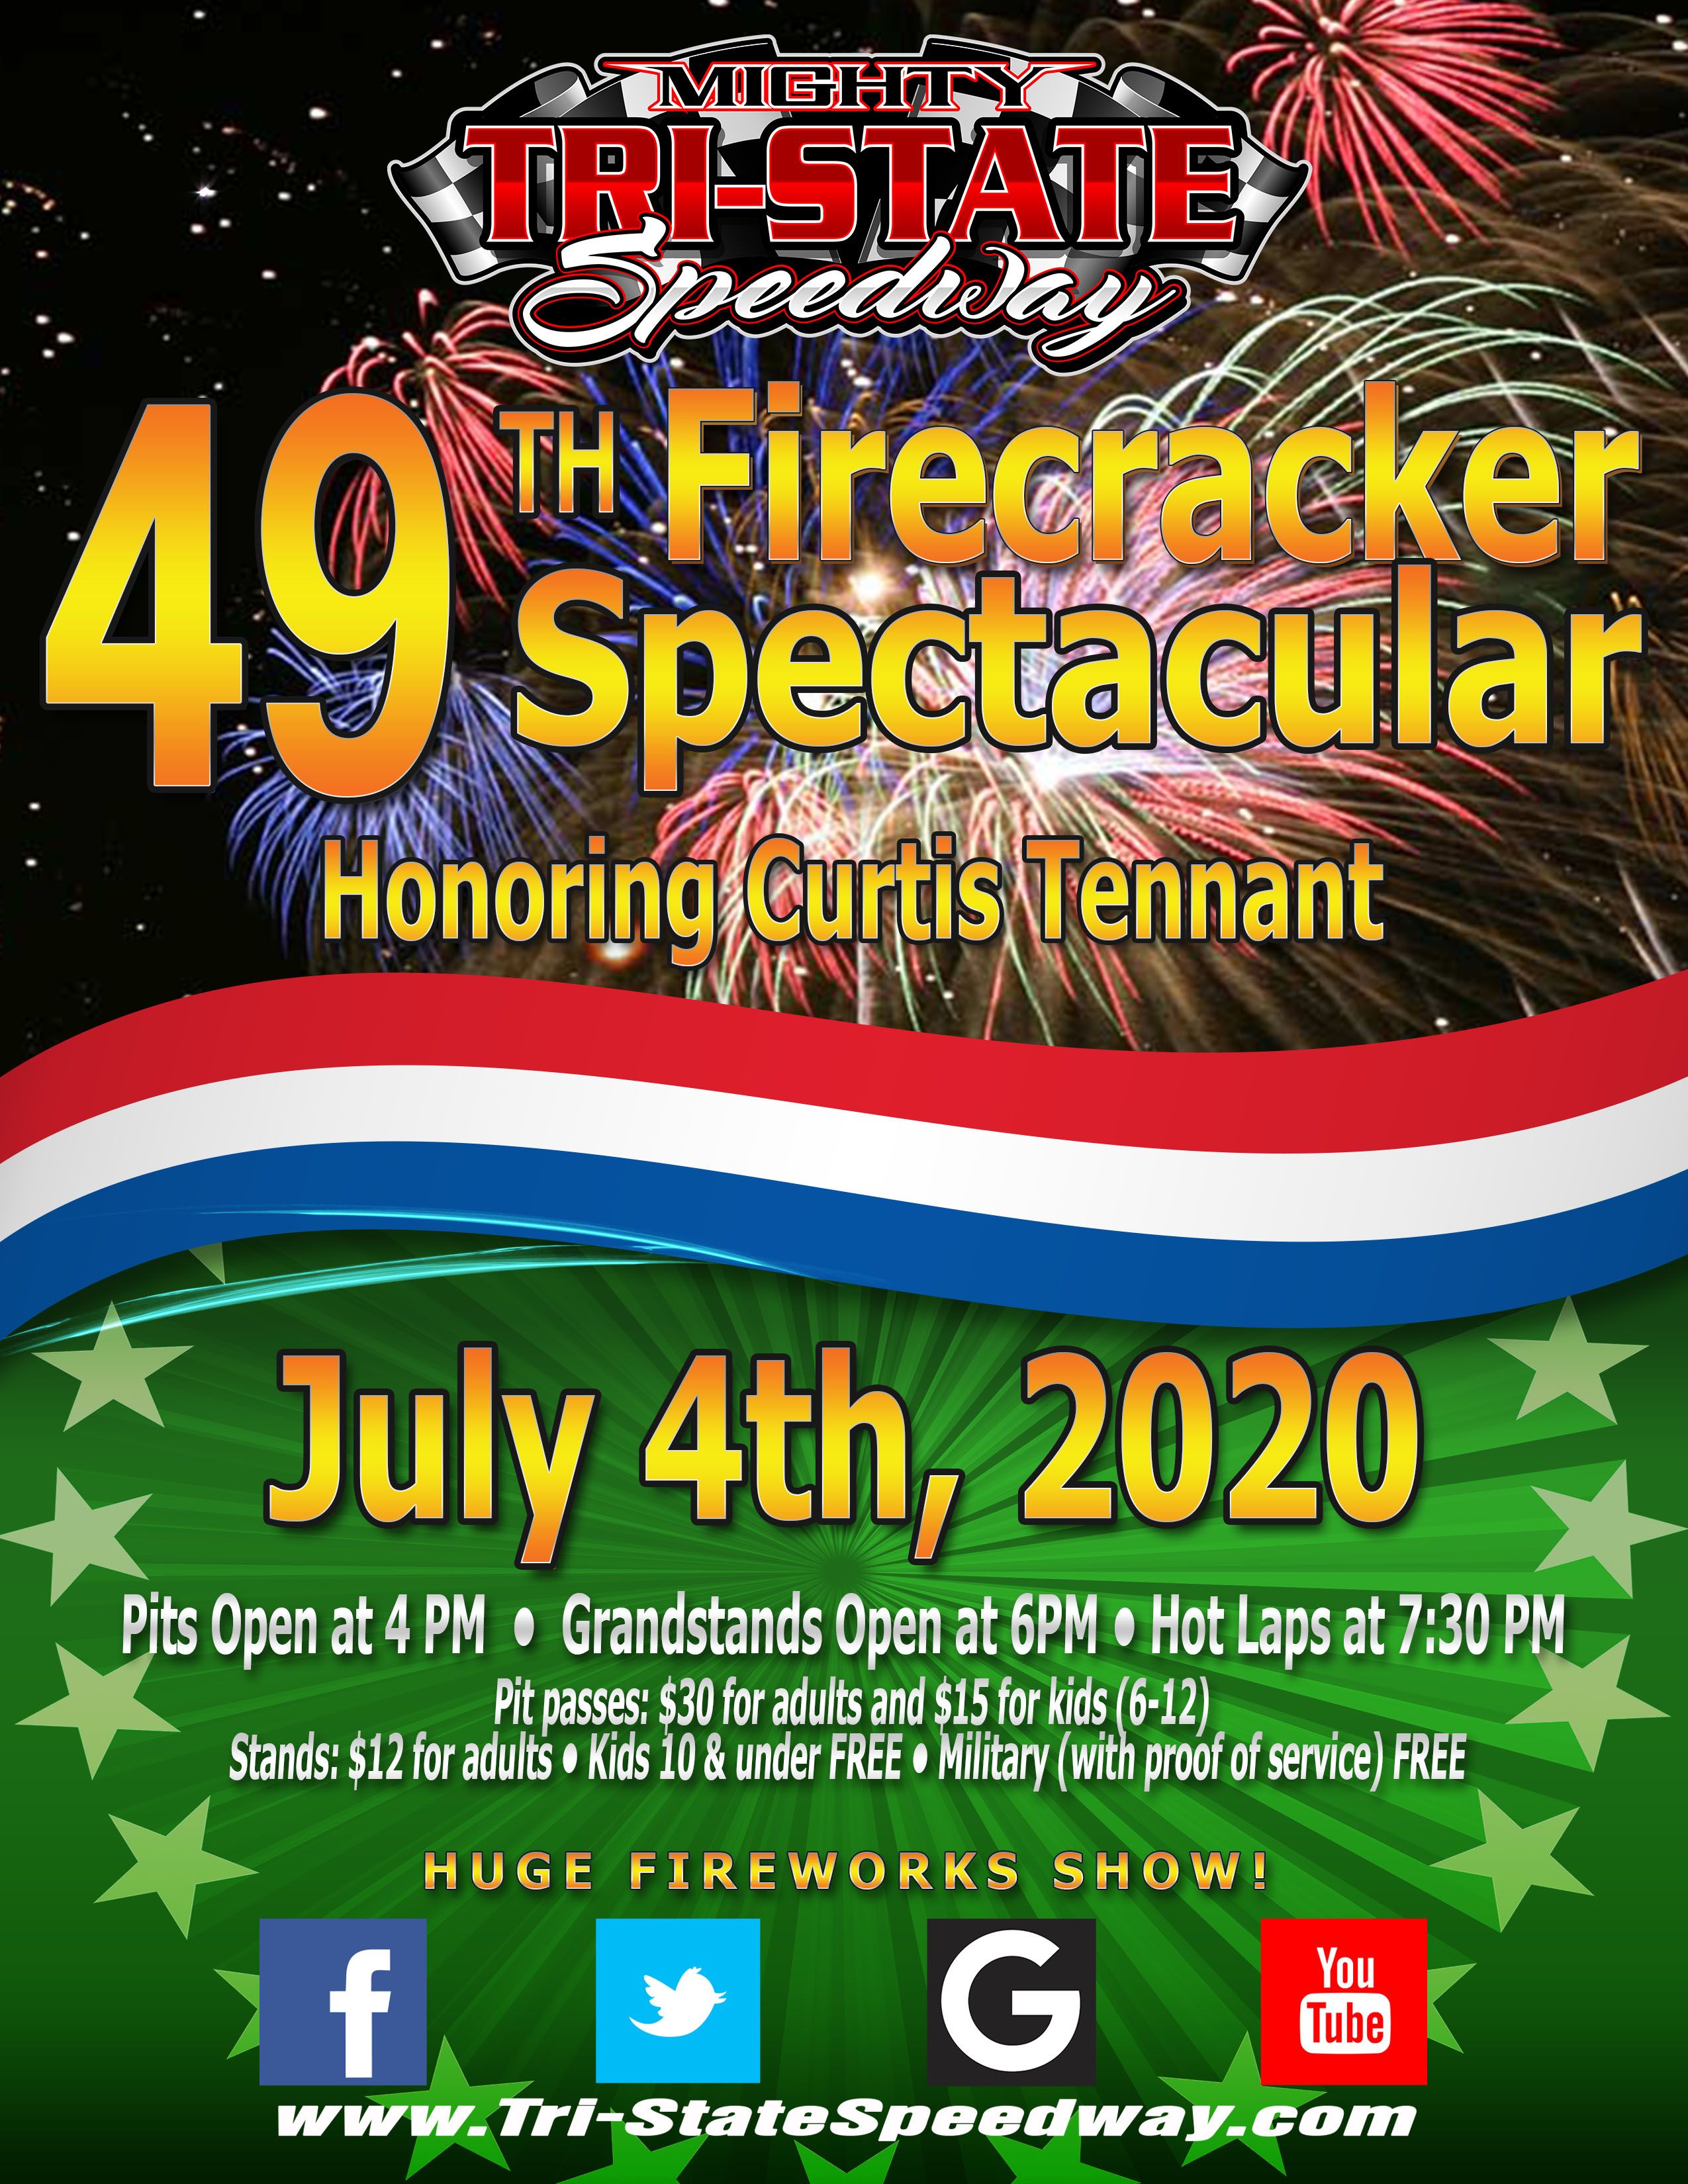 49th Annual Firecracker Spectacular Honoring Curtis Tennant